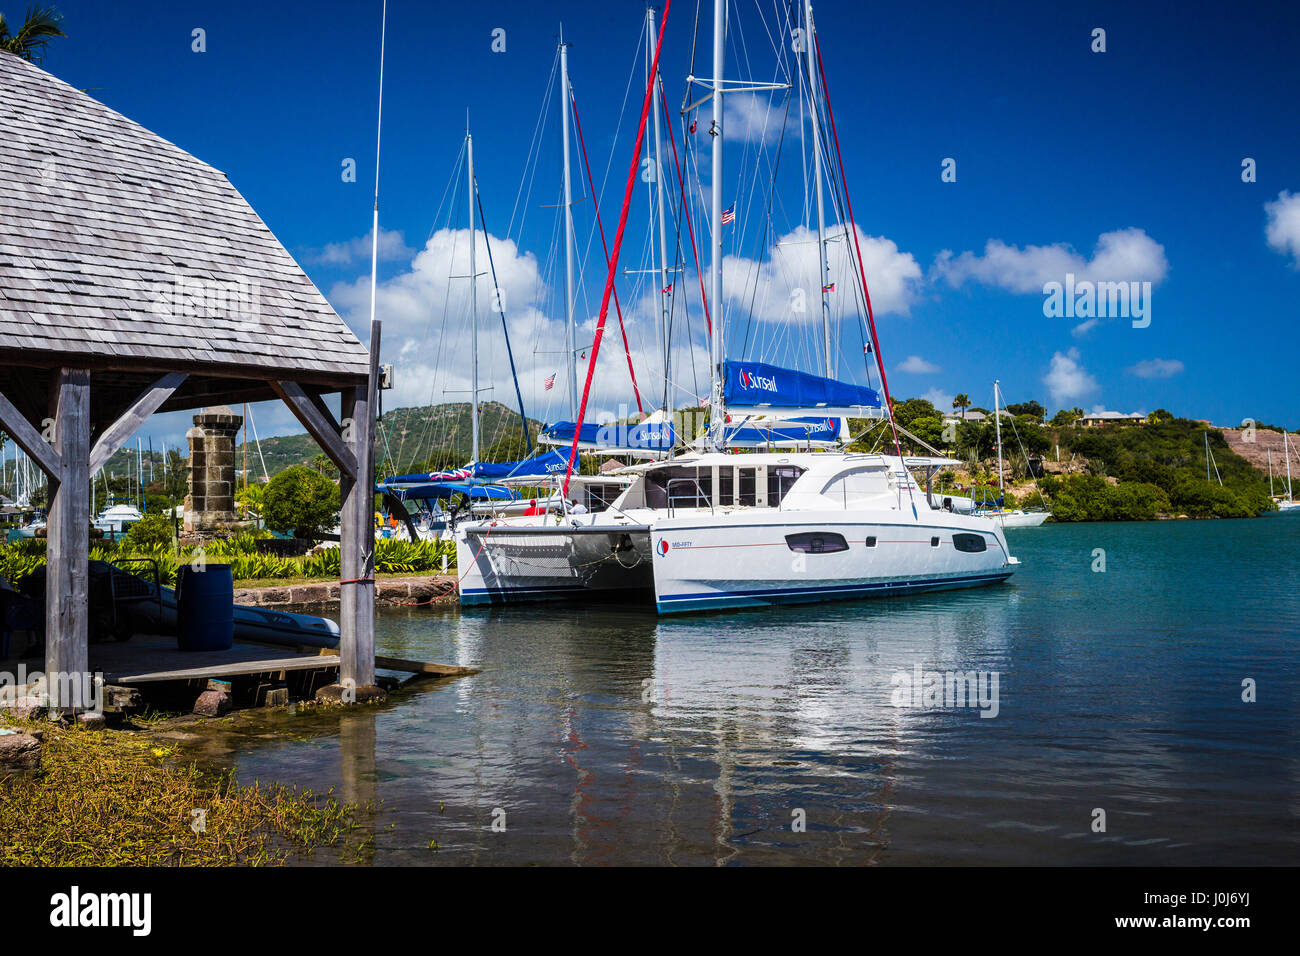 St John's Antigua catamaran in dockyard Stock Photo